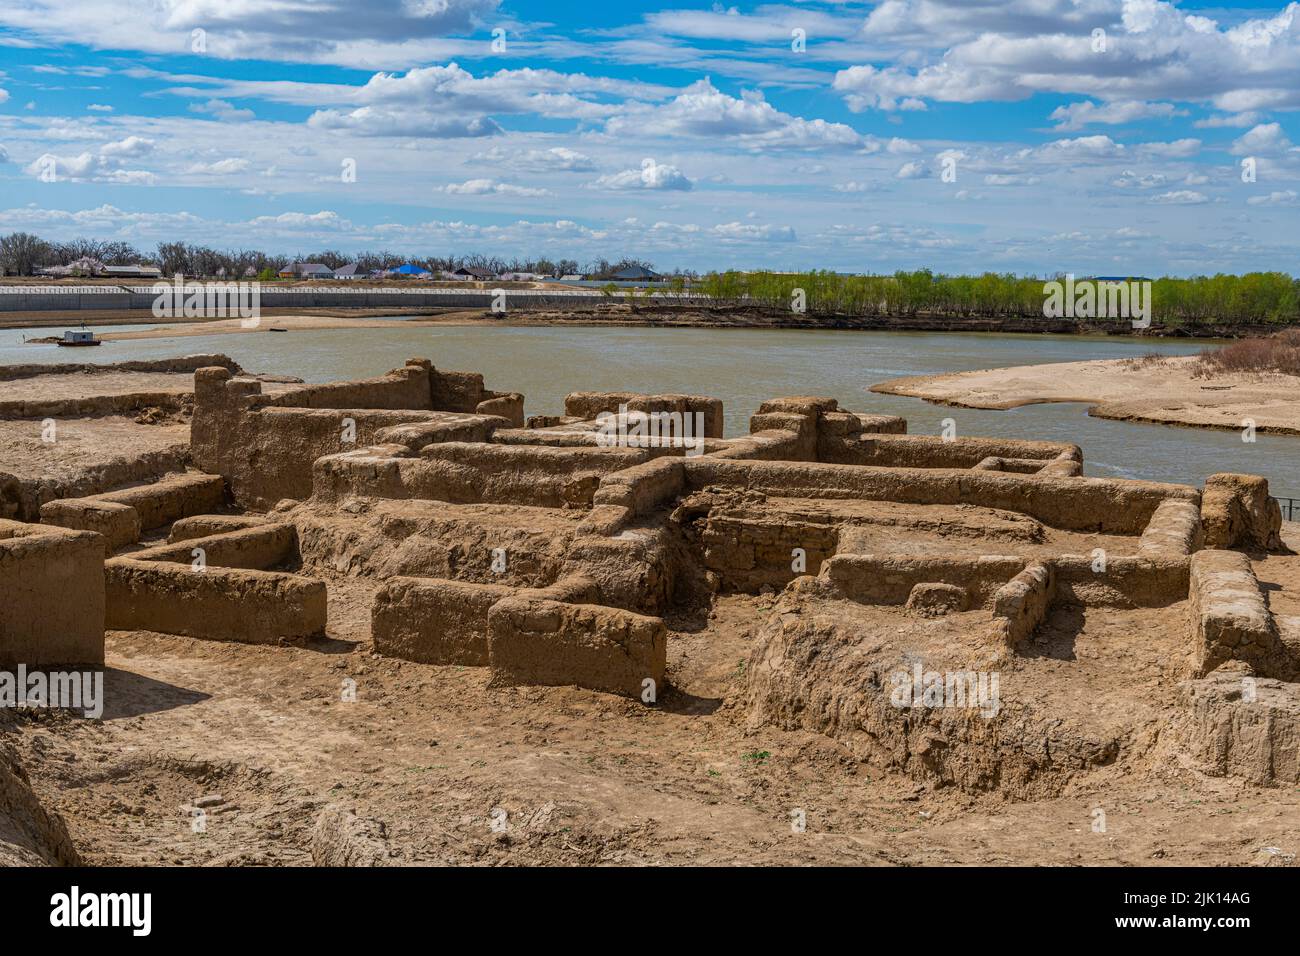 Saray-Juk ancienne colonie sur l'Oural, Atyrau, Kazakhstan, Asie centrale, Asie Banque D'Images